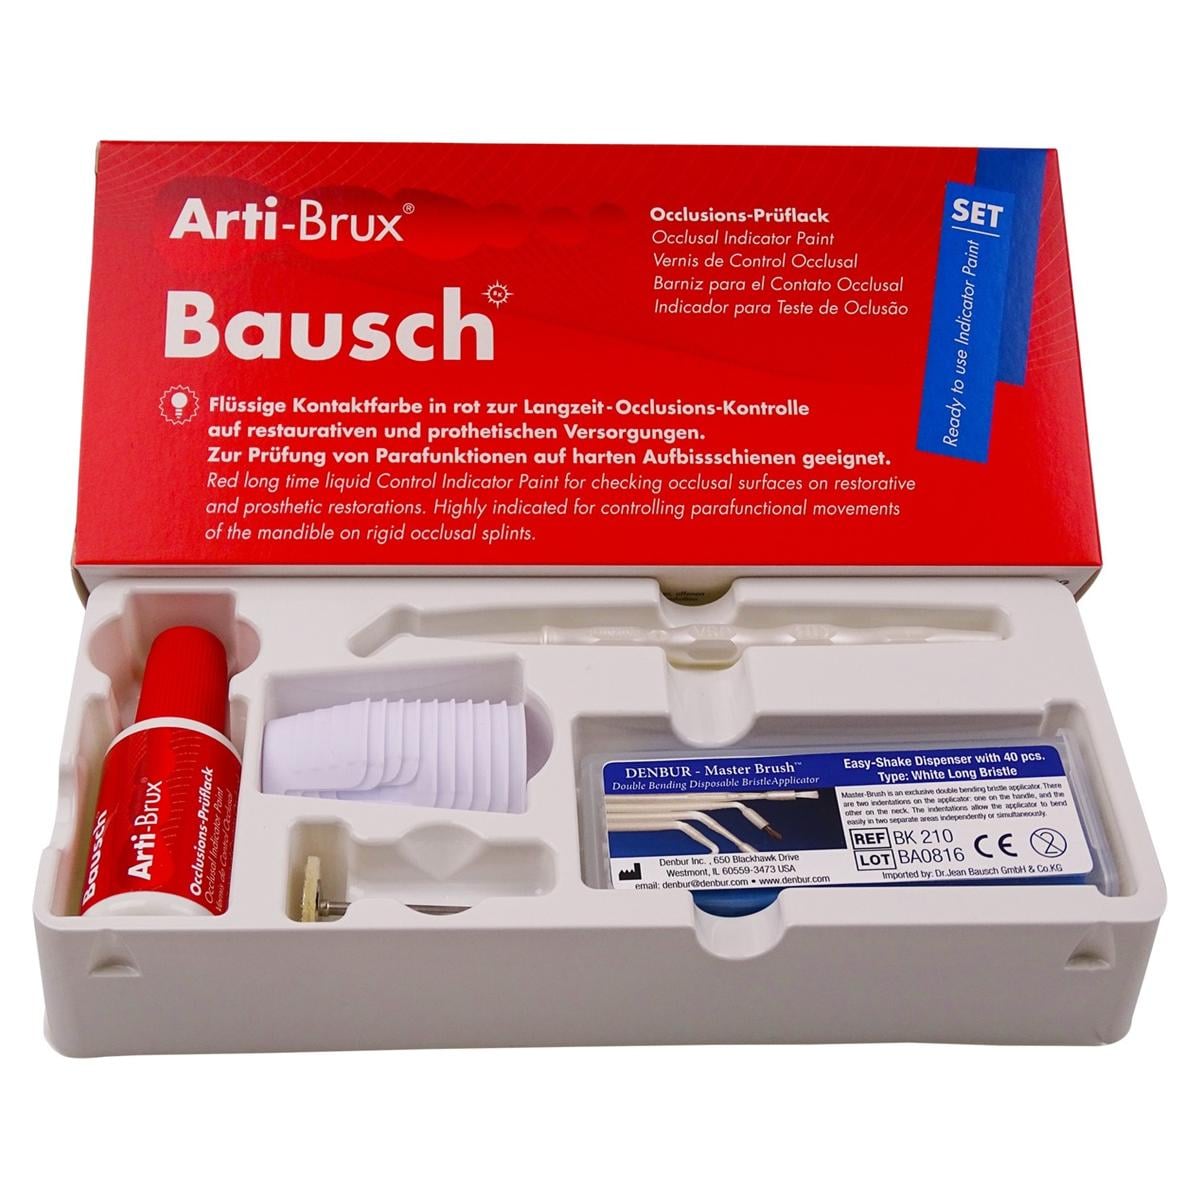 Bausch Arti-Brux® Occlusions-Prüflack - Flasche 15 ml